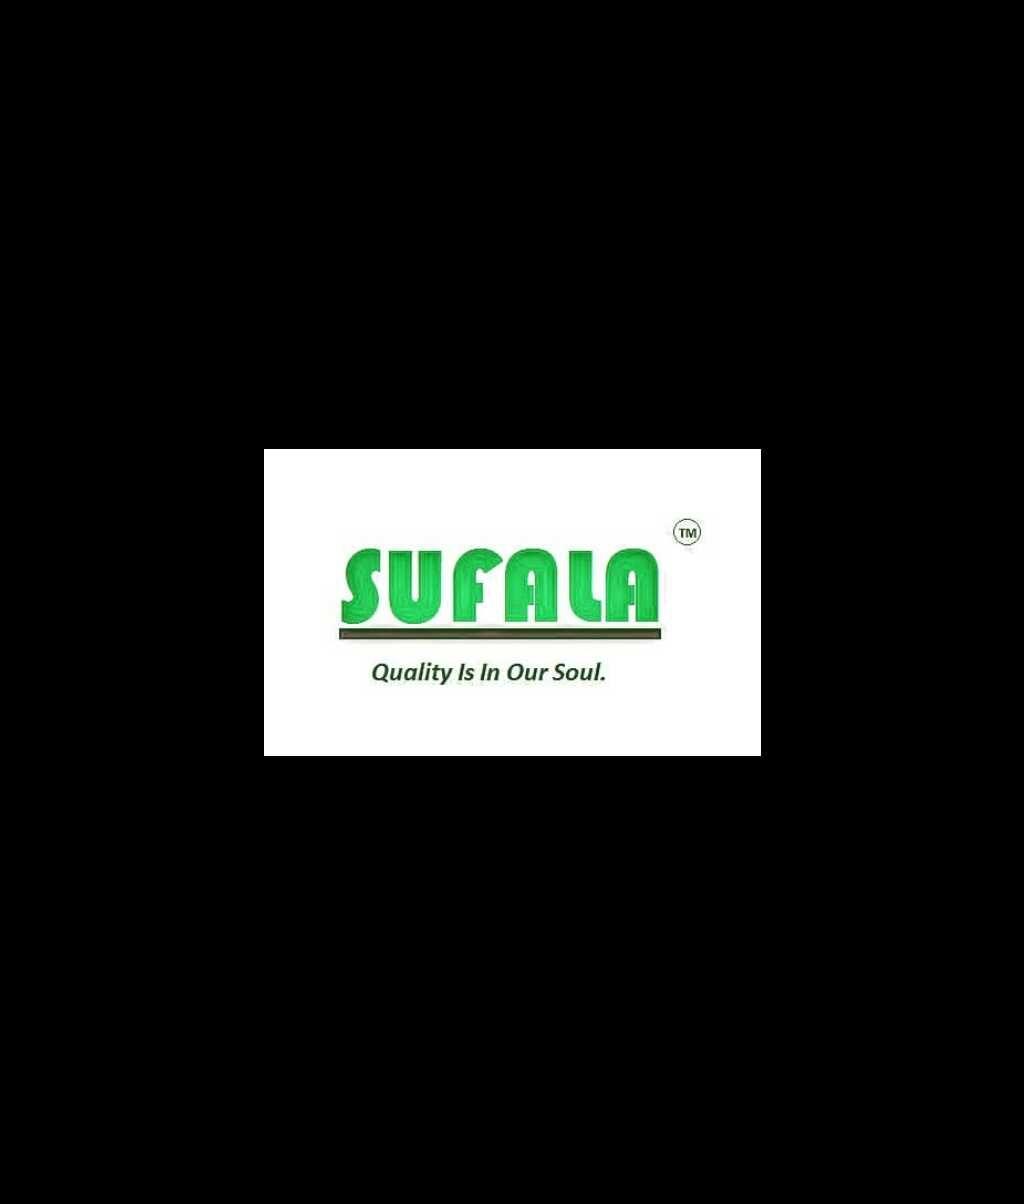 Sufala Traders